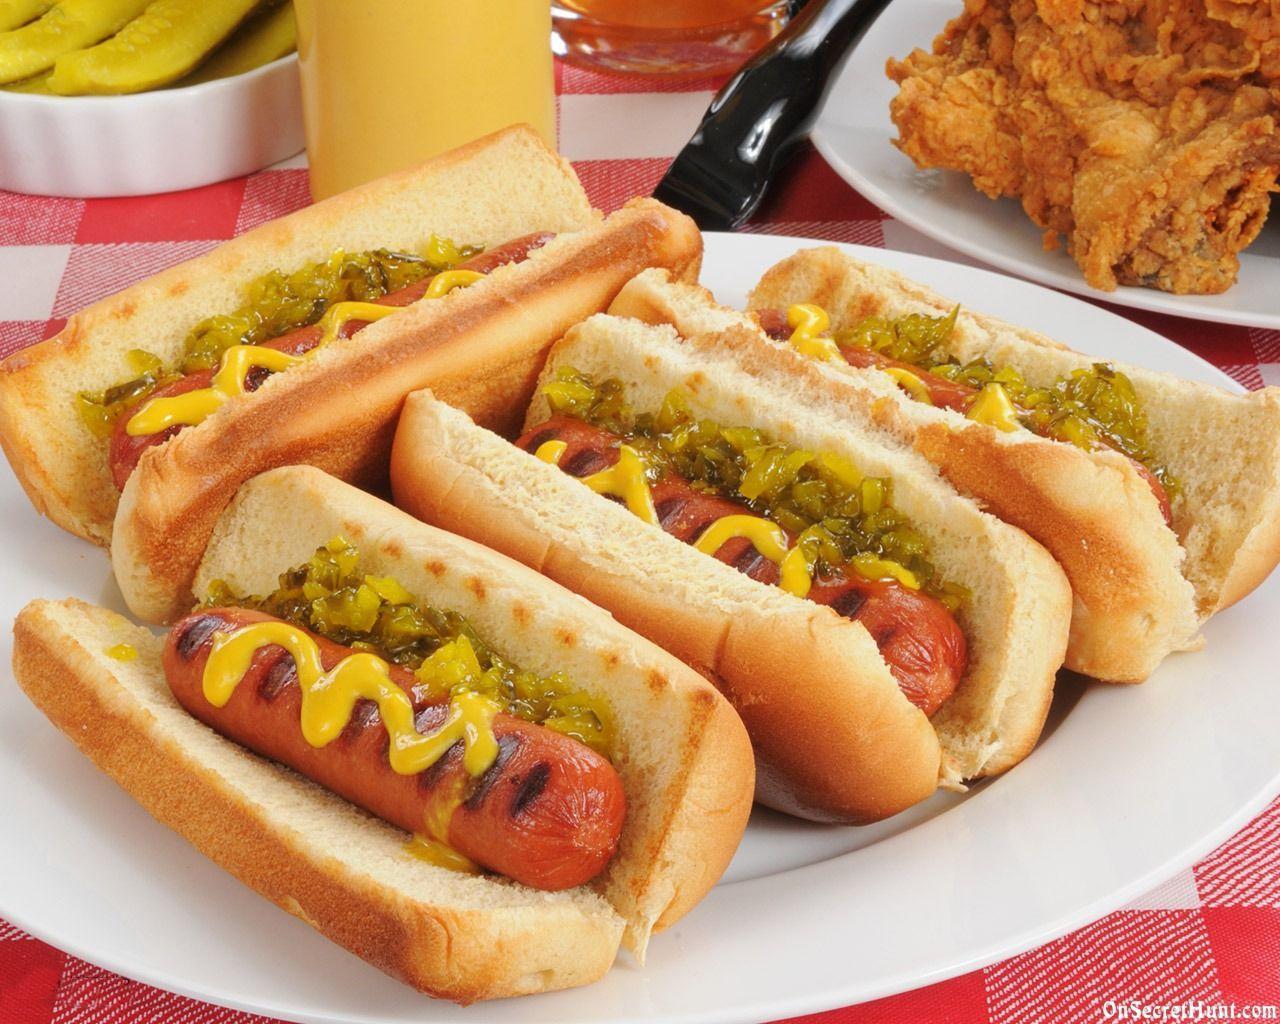 Hot Dog Wallpaper, 37 Best HD Image of Hot Dog, High Quality Hot